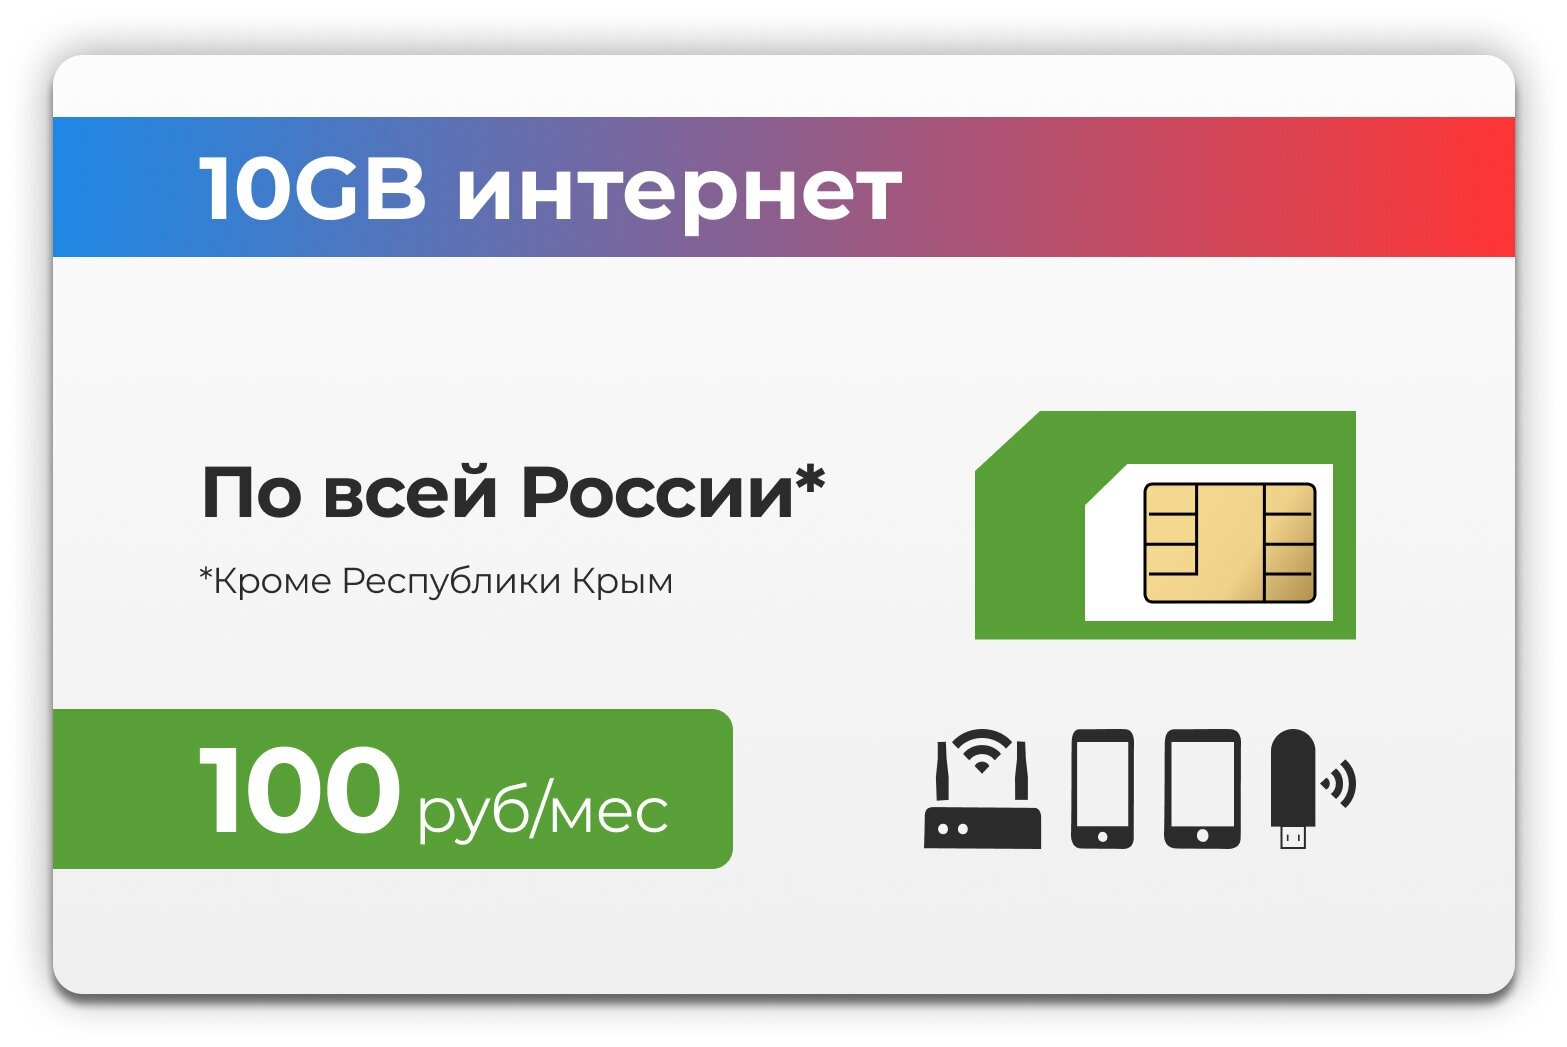 Сим-карта + 10GB интернет тариф 3G / 4G за 100 руб в месяц (Вся Россия)